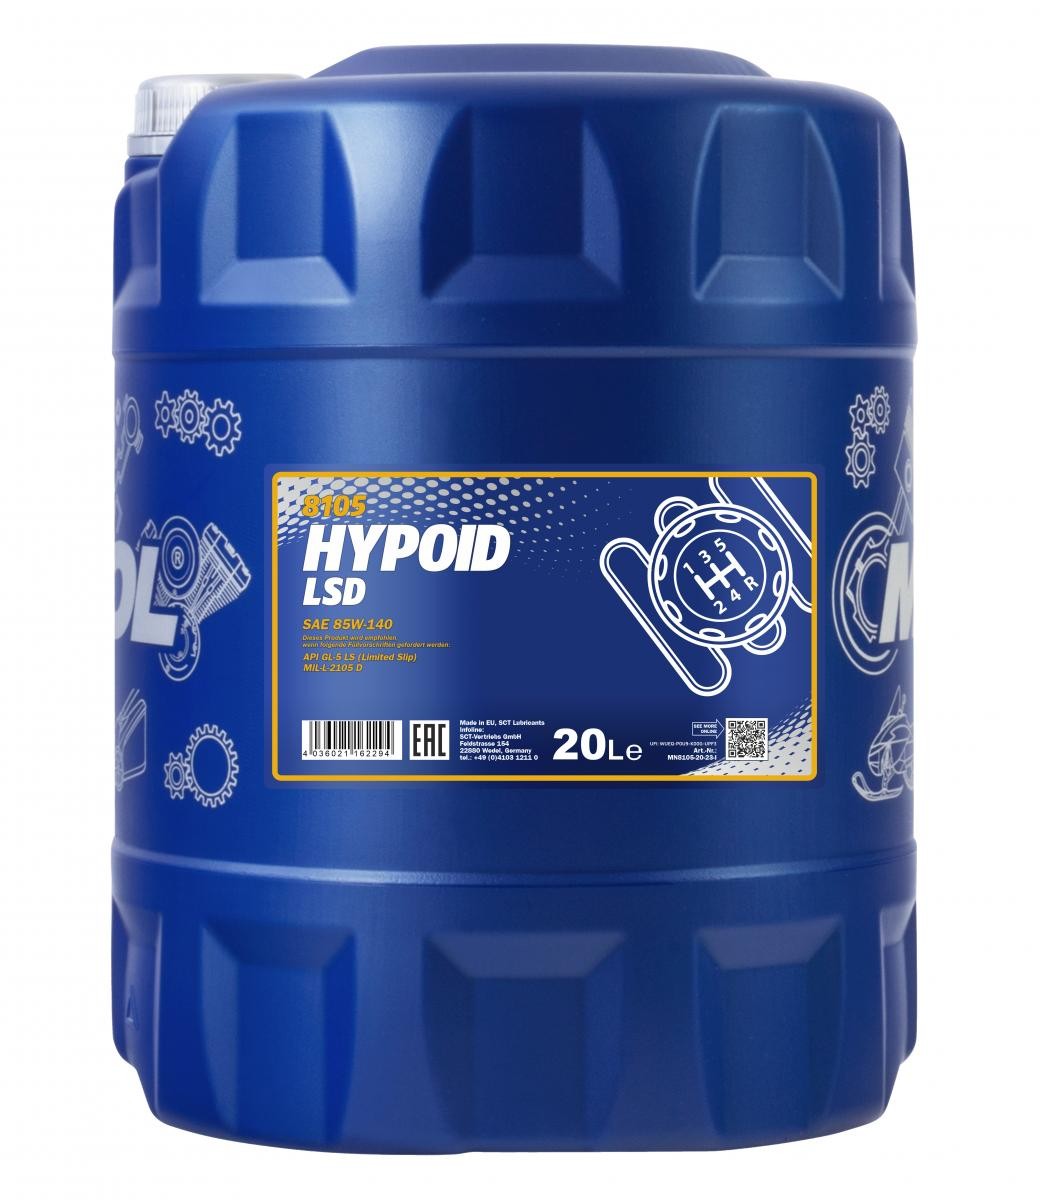 MANNOL Hypoid LSD 85W-140, Mineral Oil, Capacity: 20l MIL-L 2105 D Transmission oil MN8105-20 buy